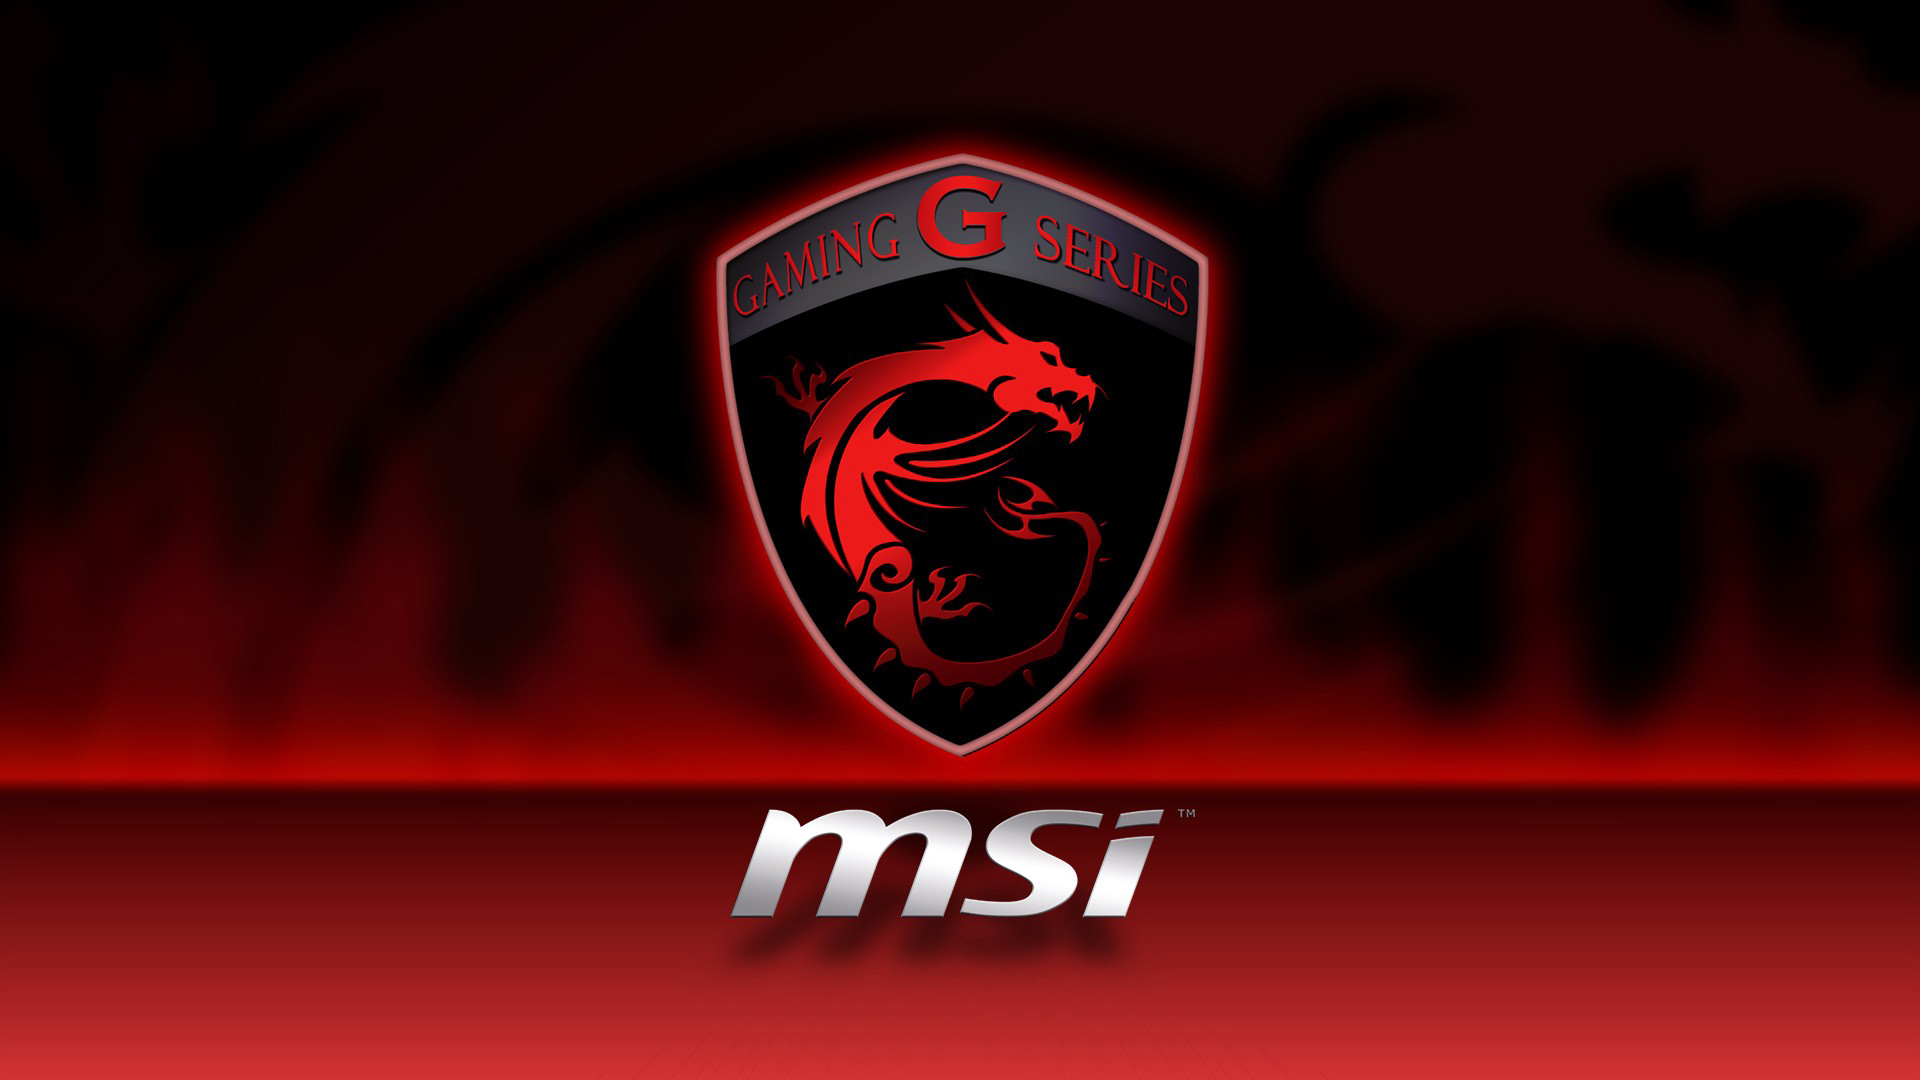 msi gaming g series dragon logo hd 1920x1080 1080p wallpaper